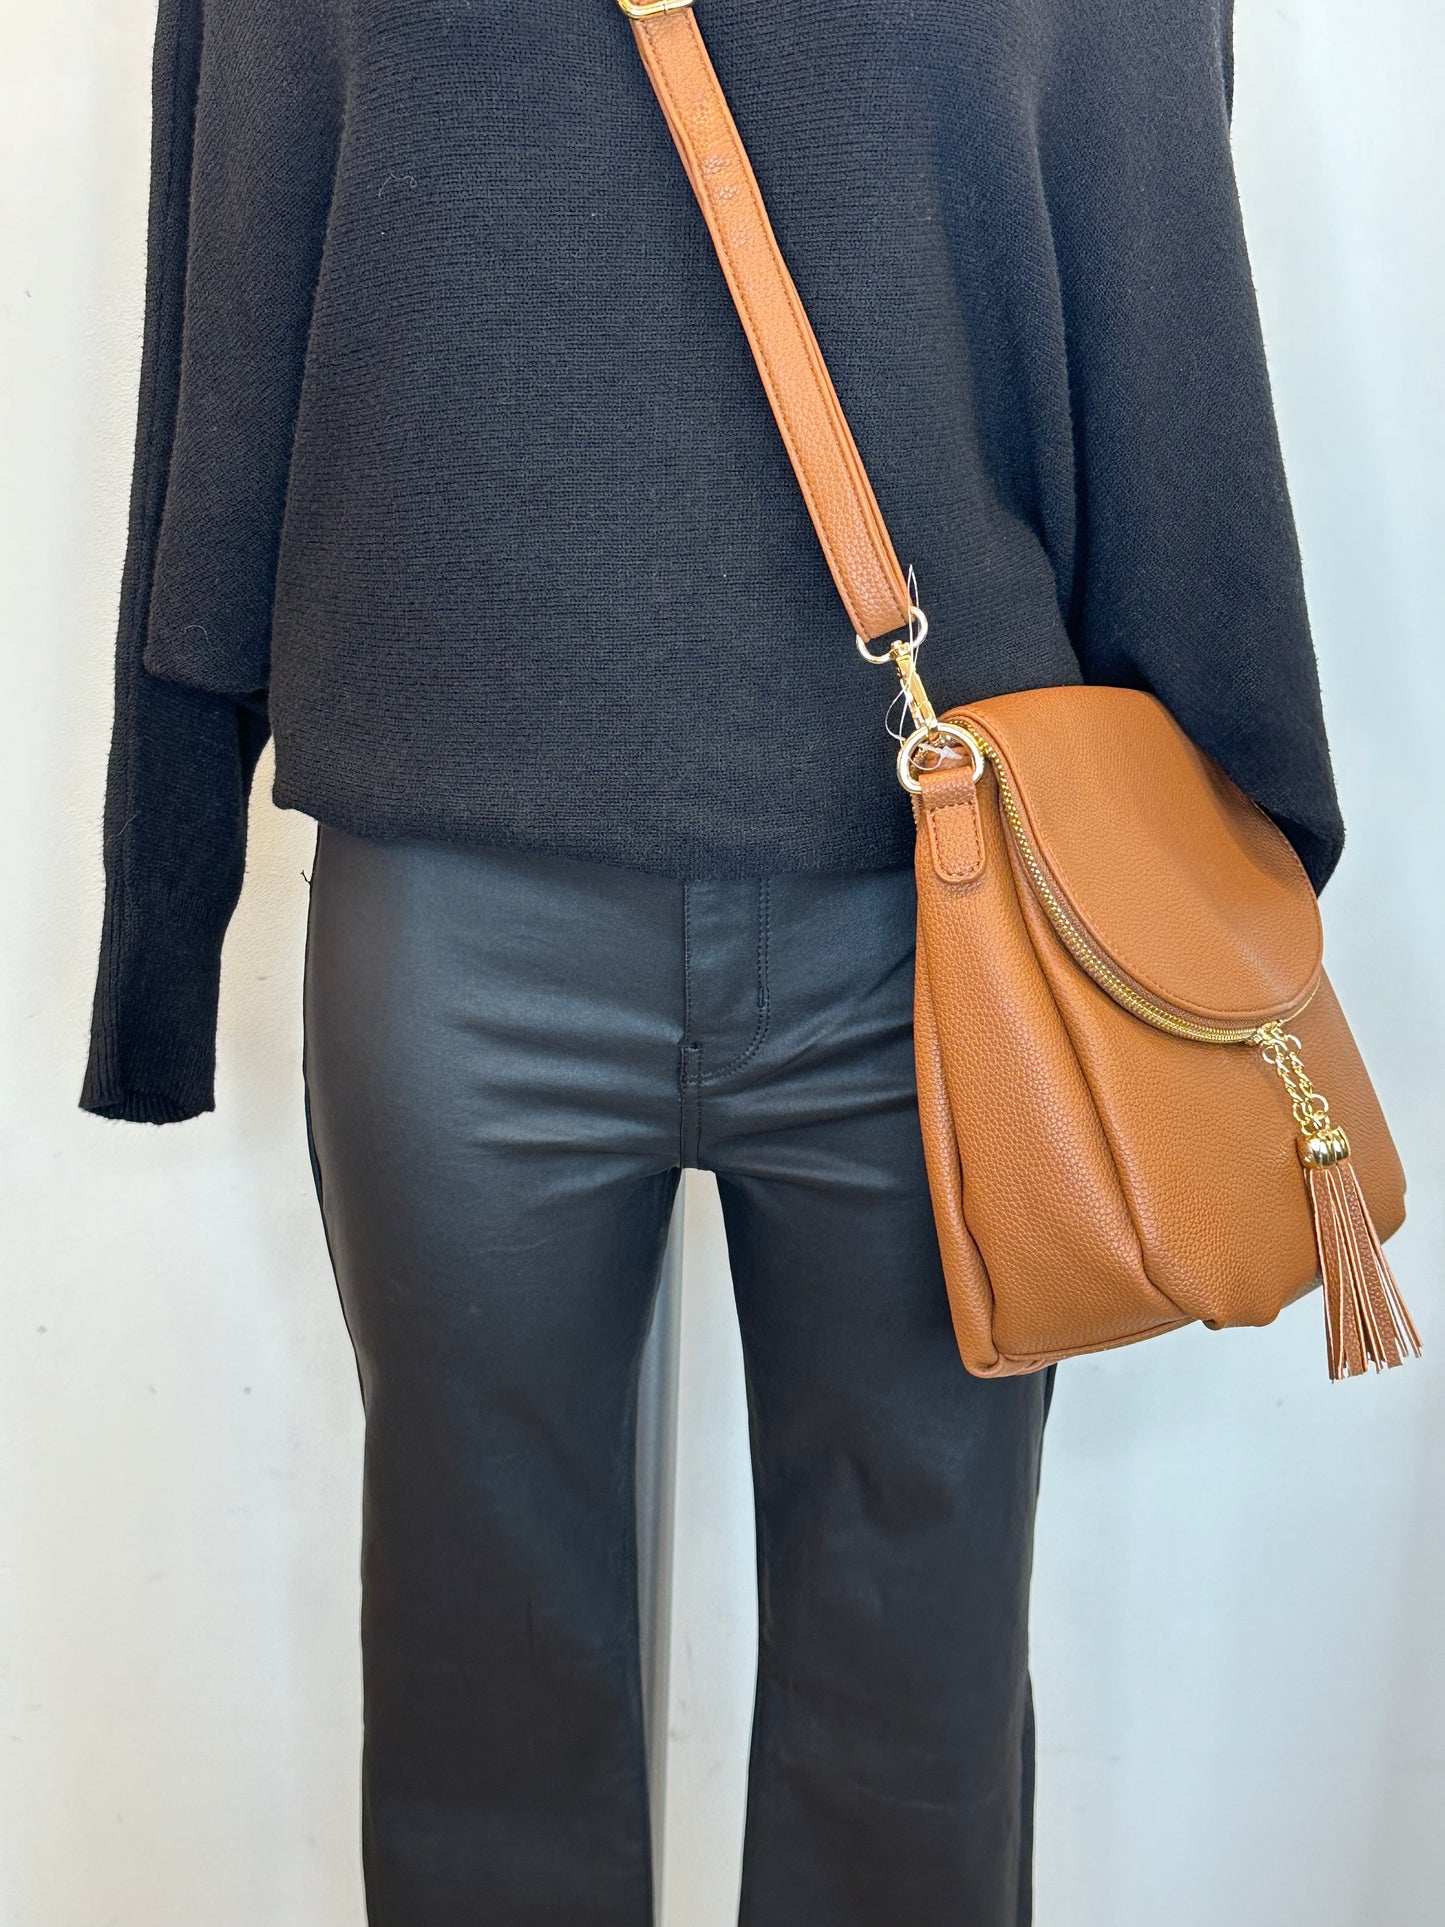 Soft satchel tassel bag - Brown colour